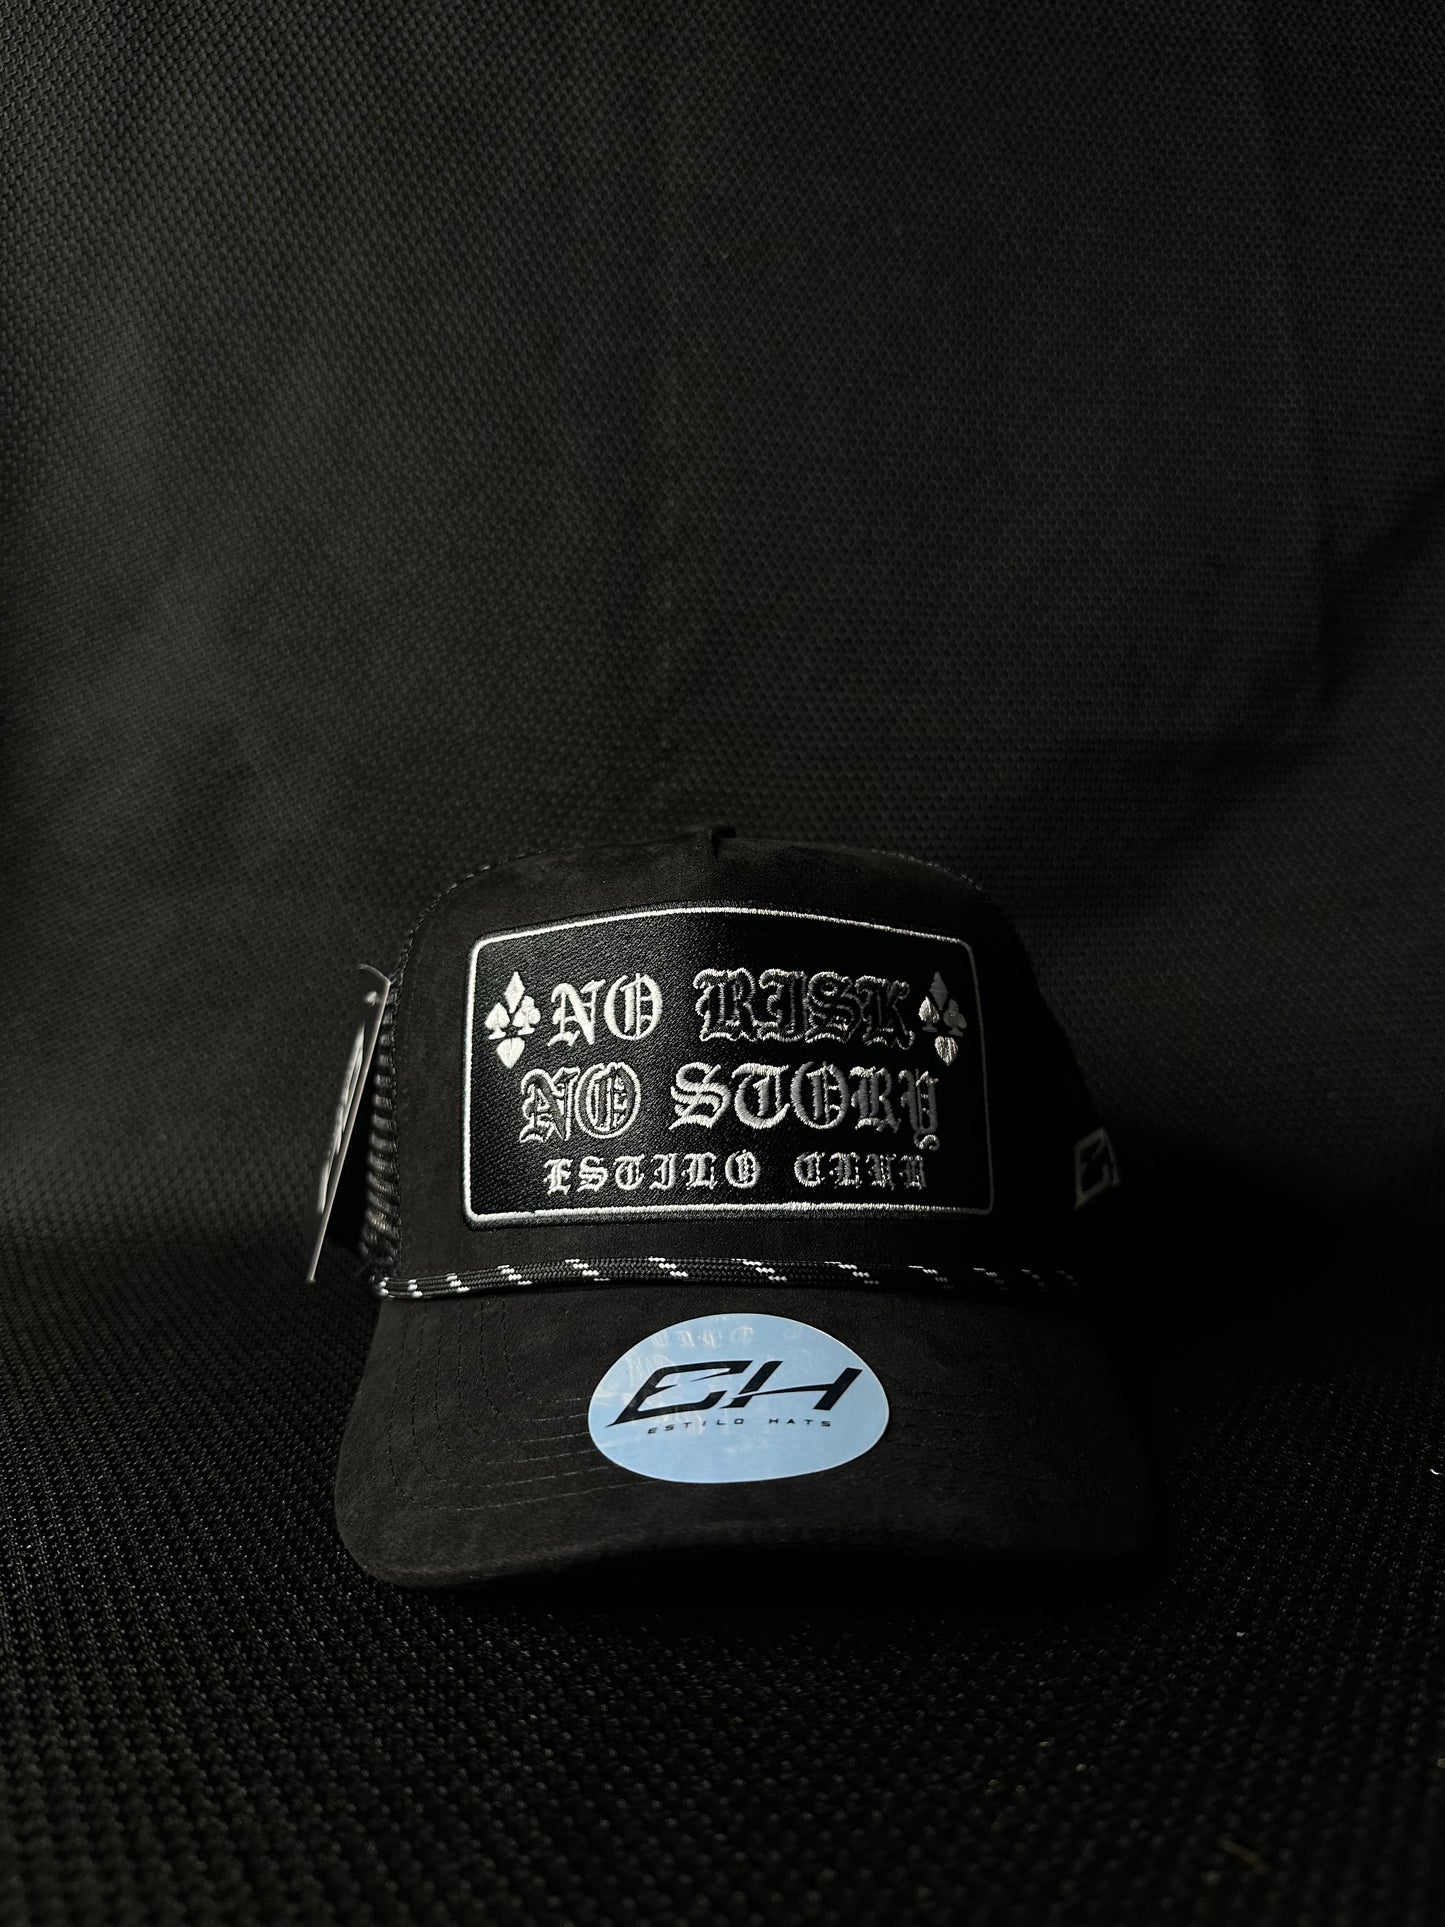 Estilo Club Hat "No Risk No Story"